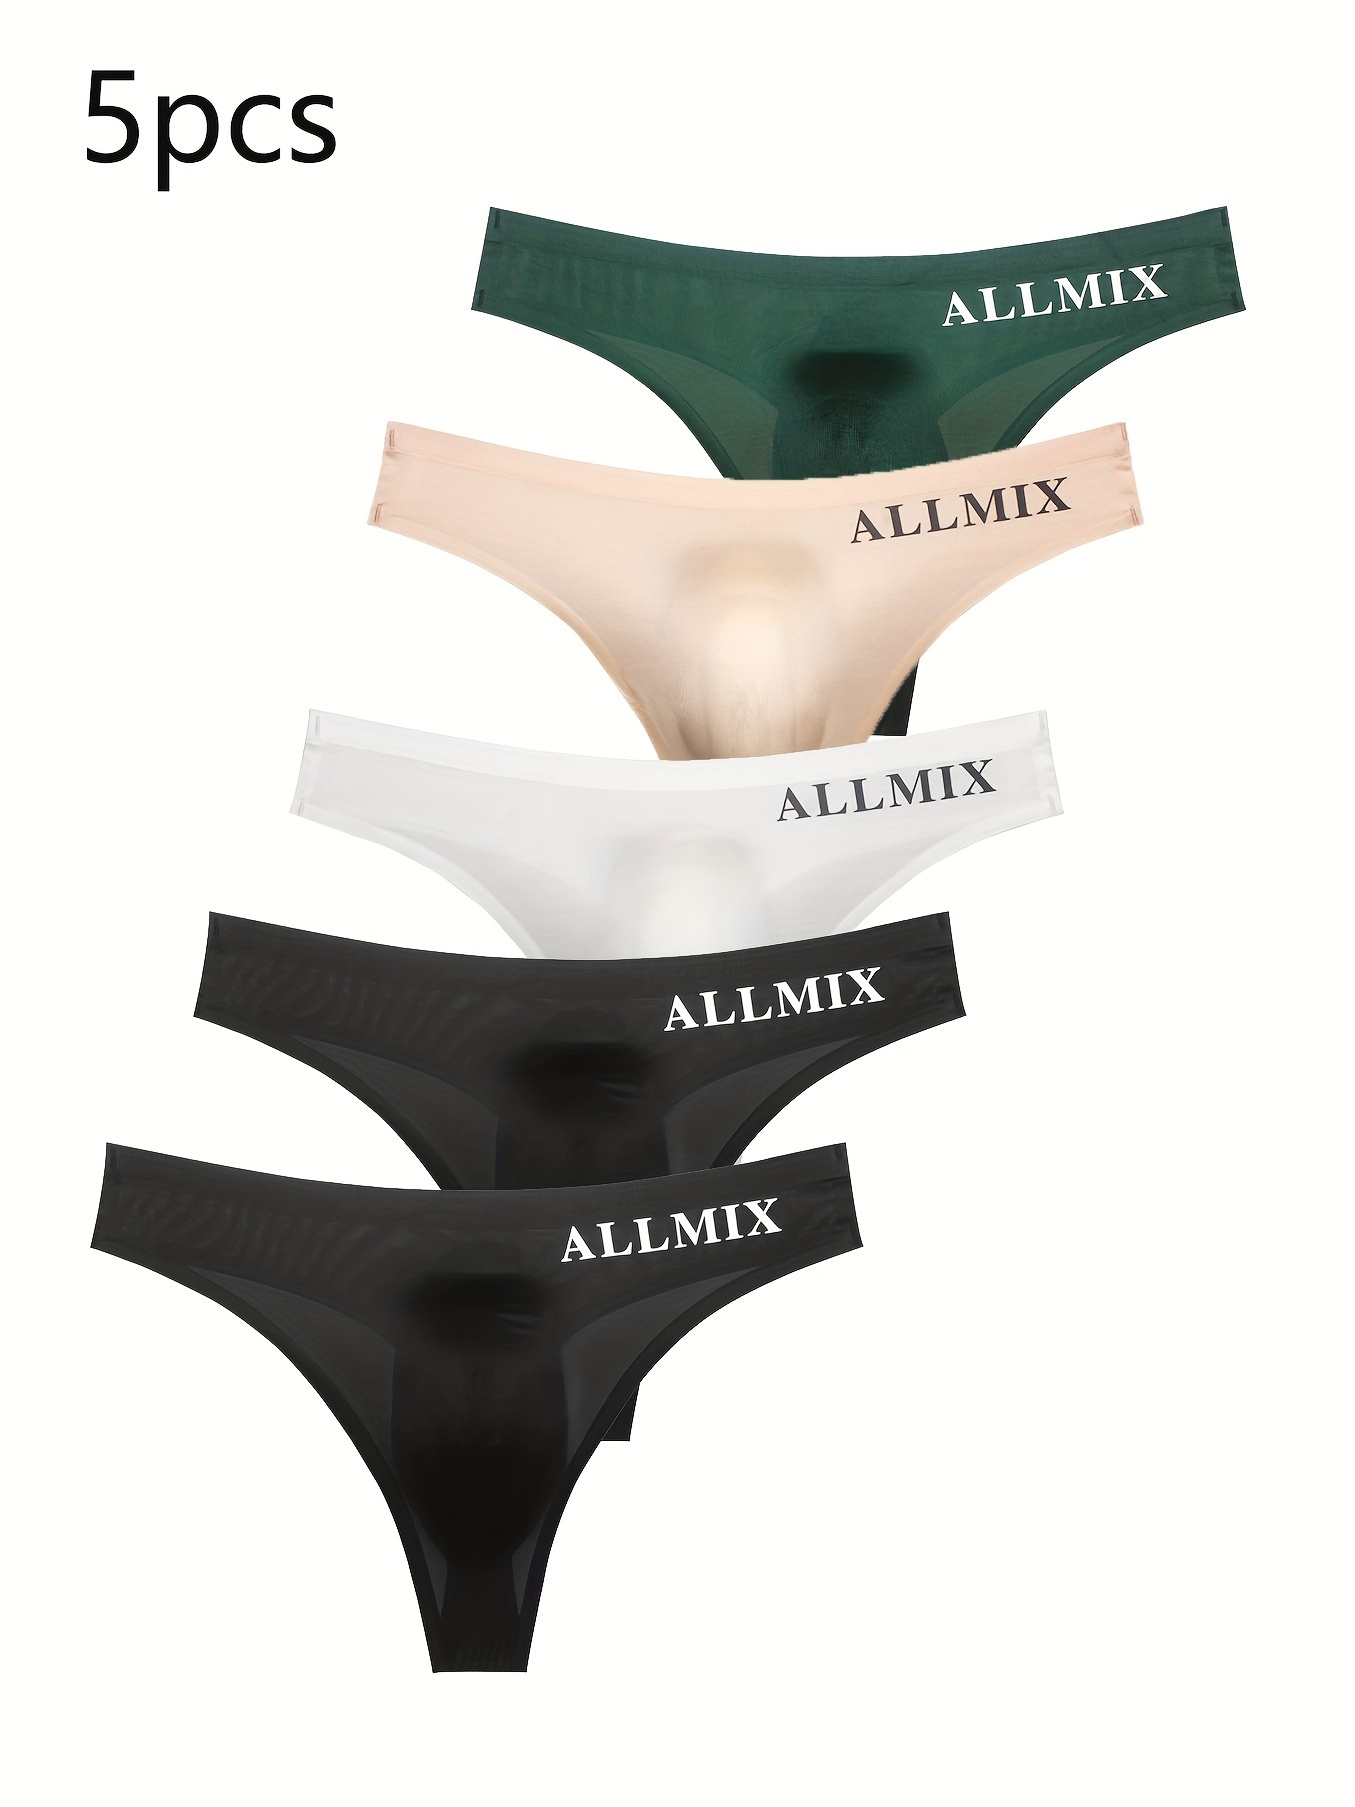 These exact Gilligan O'Malley underwear, any color, originally